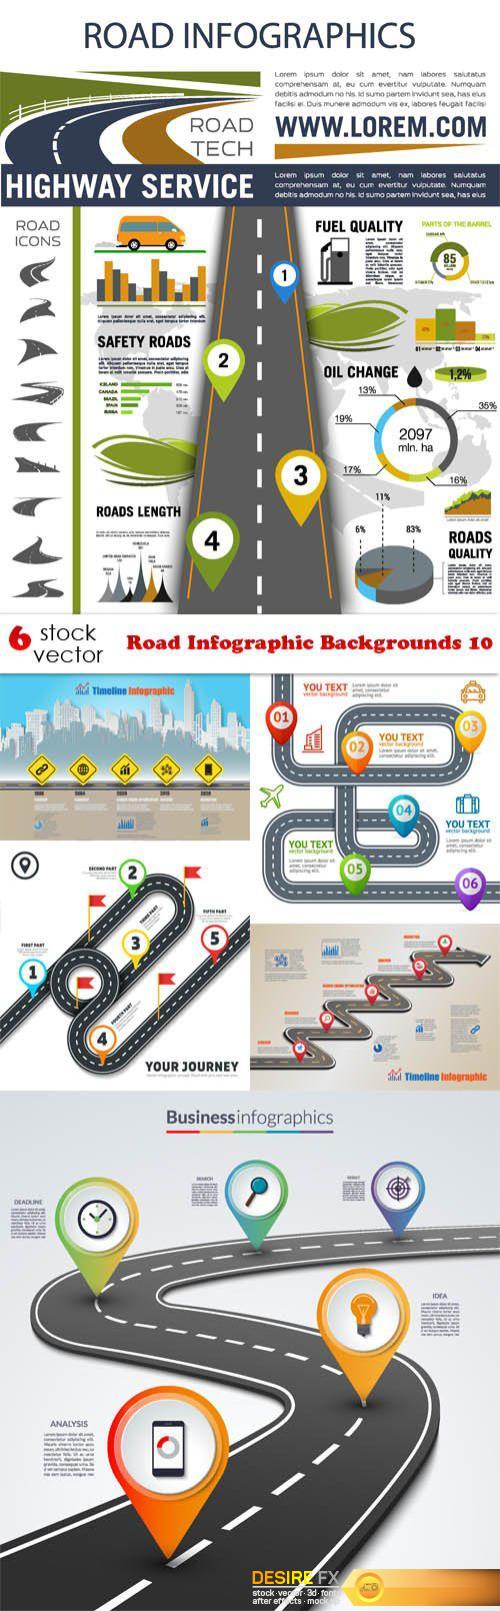 Vectors - Road Infographic Backgrounds 10